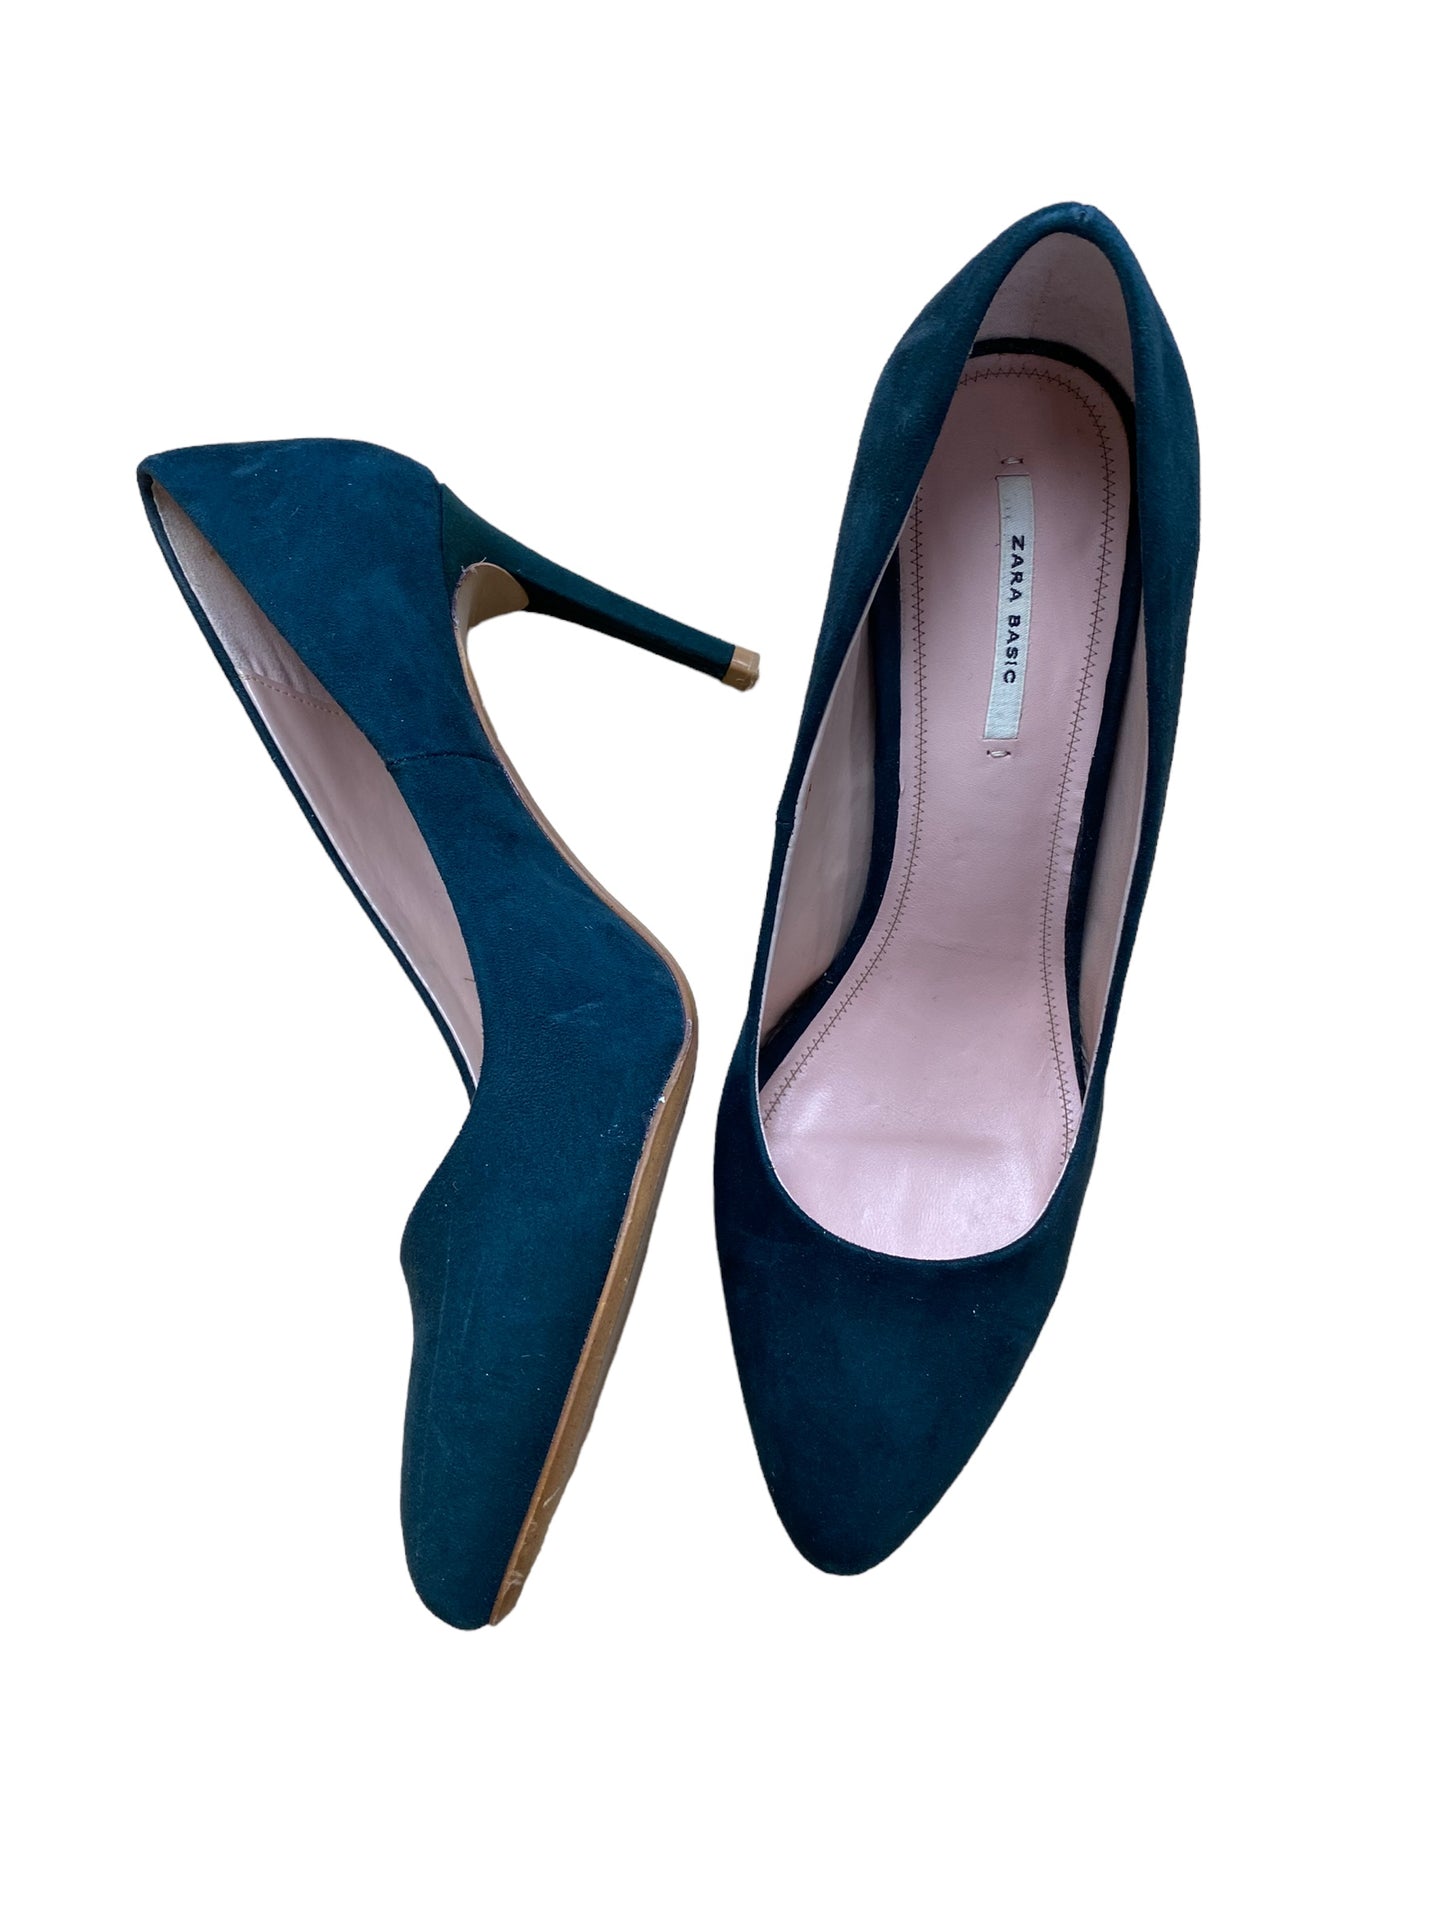 Shoes Heels Stiletto By Zara Basic  Size: 9